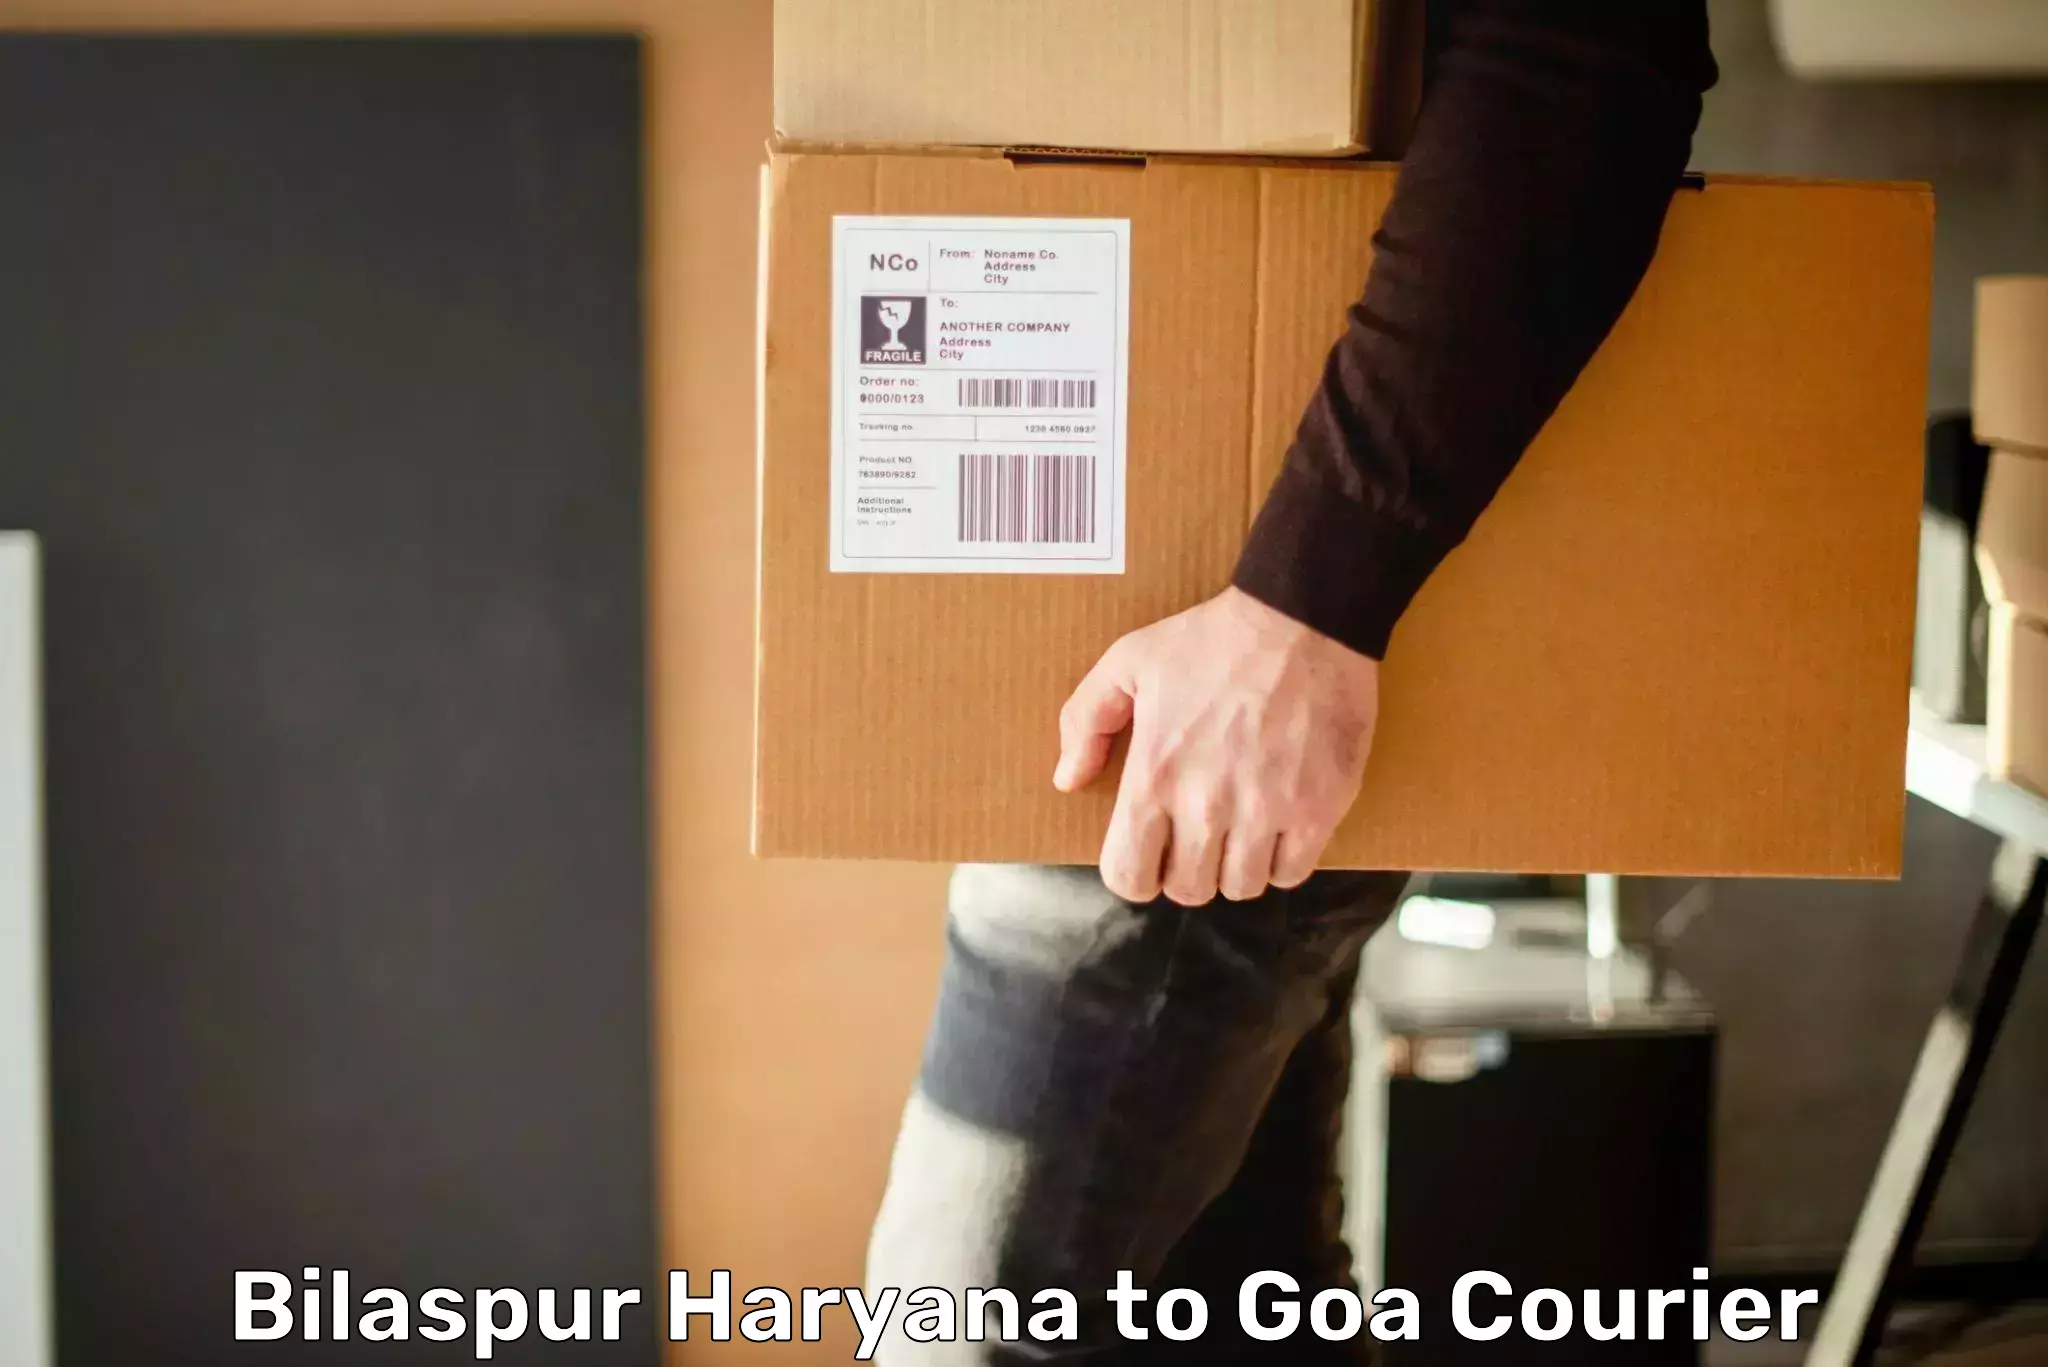 Speedy delivery service Bilaspur Haryana to Panaji